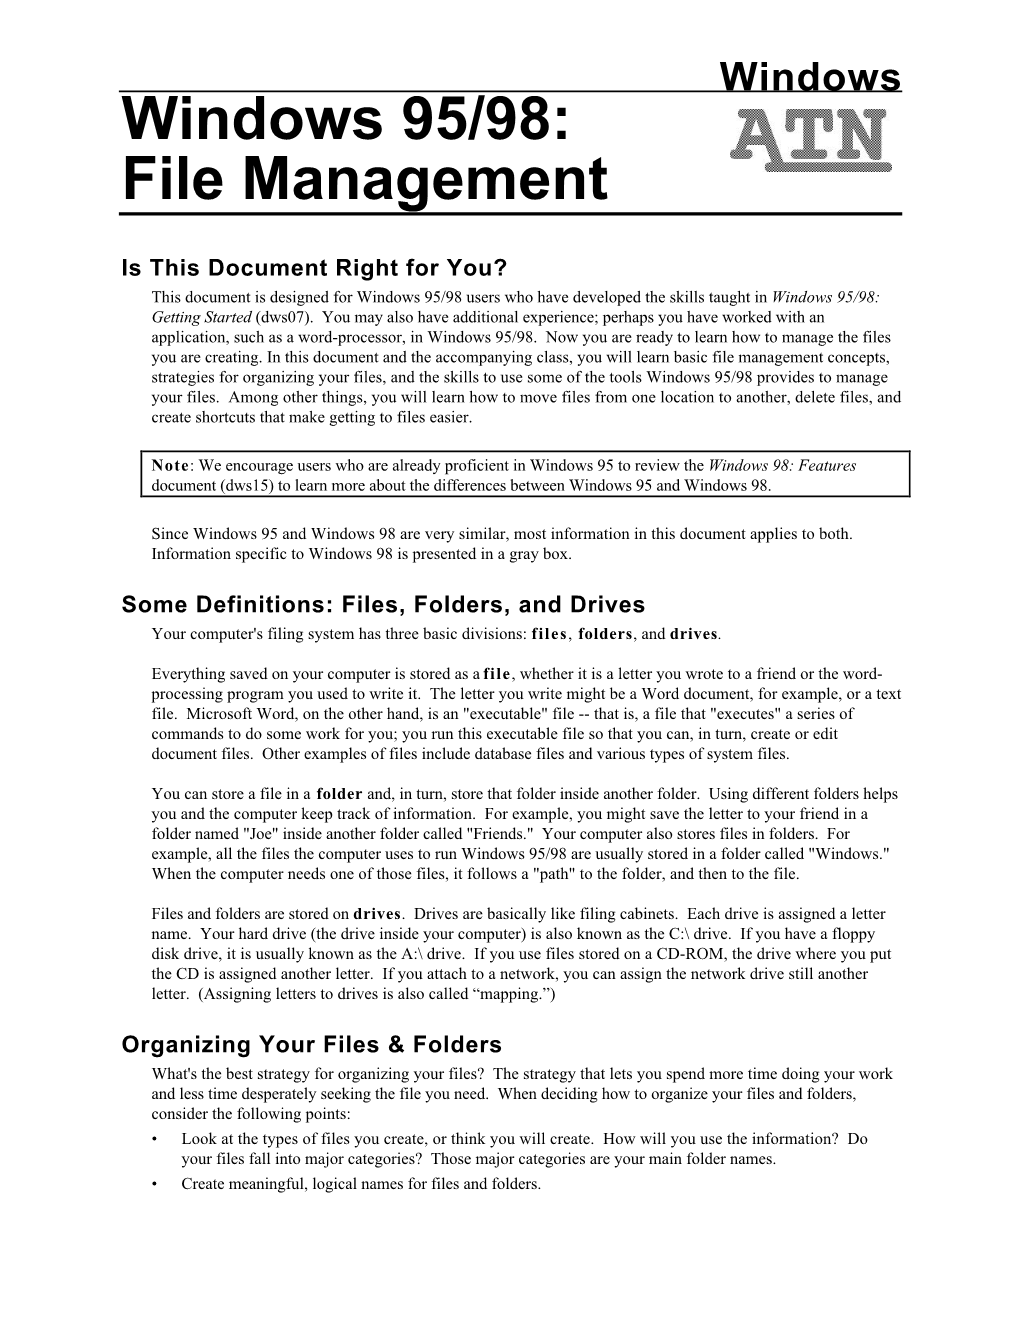 Windows 95/98: File Management